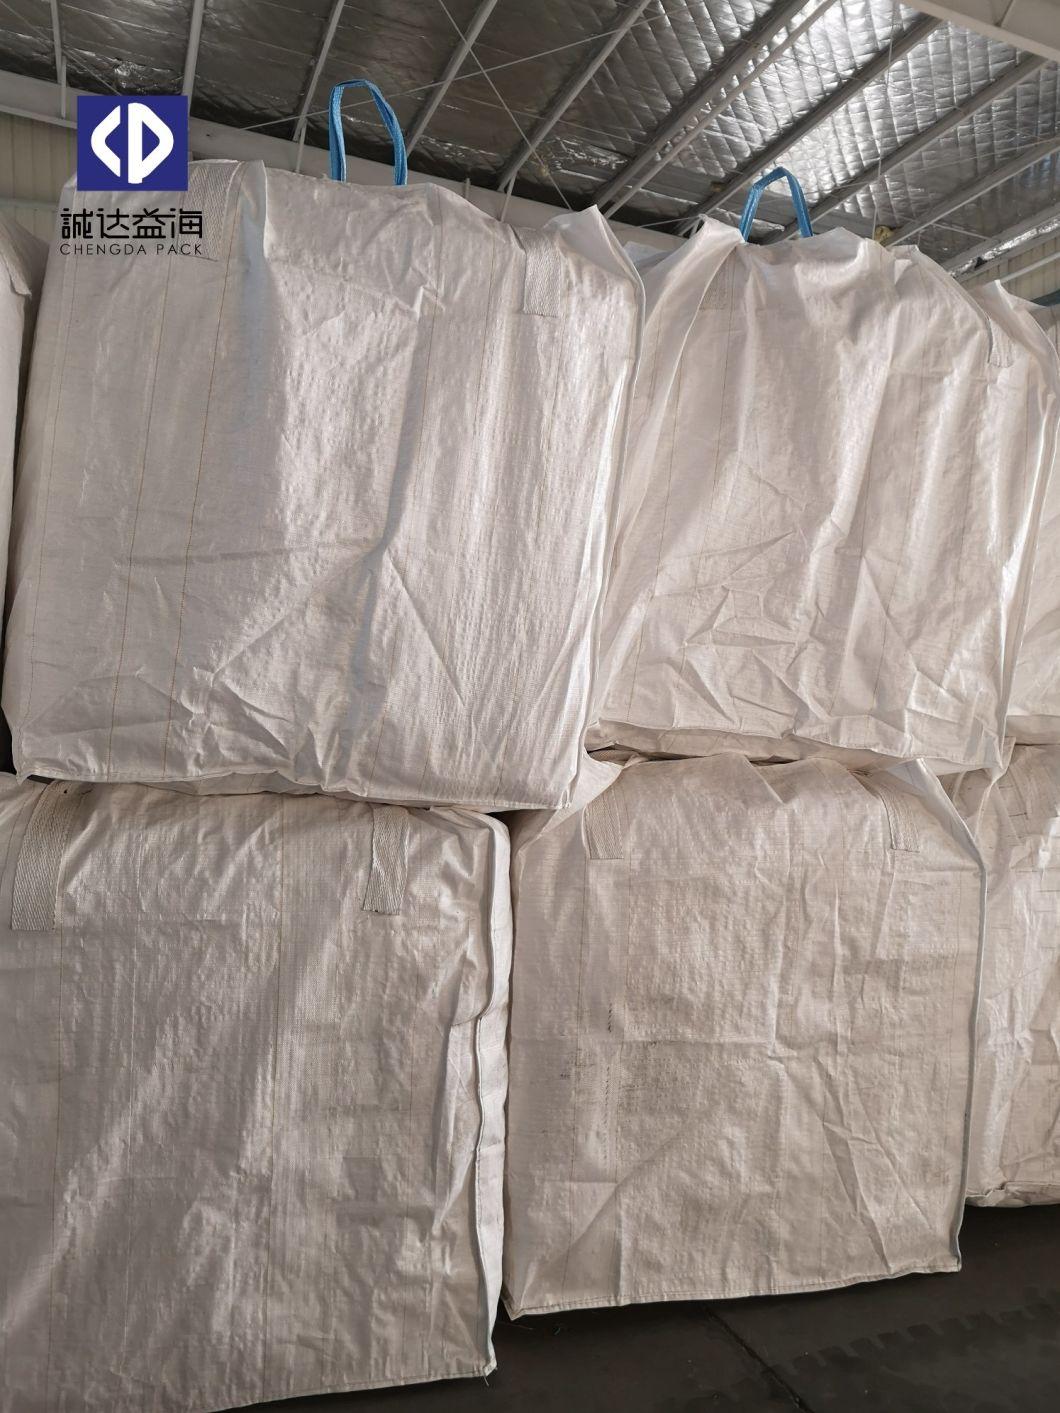 Plastic One Ton PP Bulk Bags 1000kg Jumbo Bags White Color